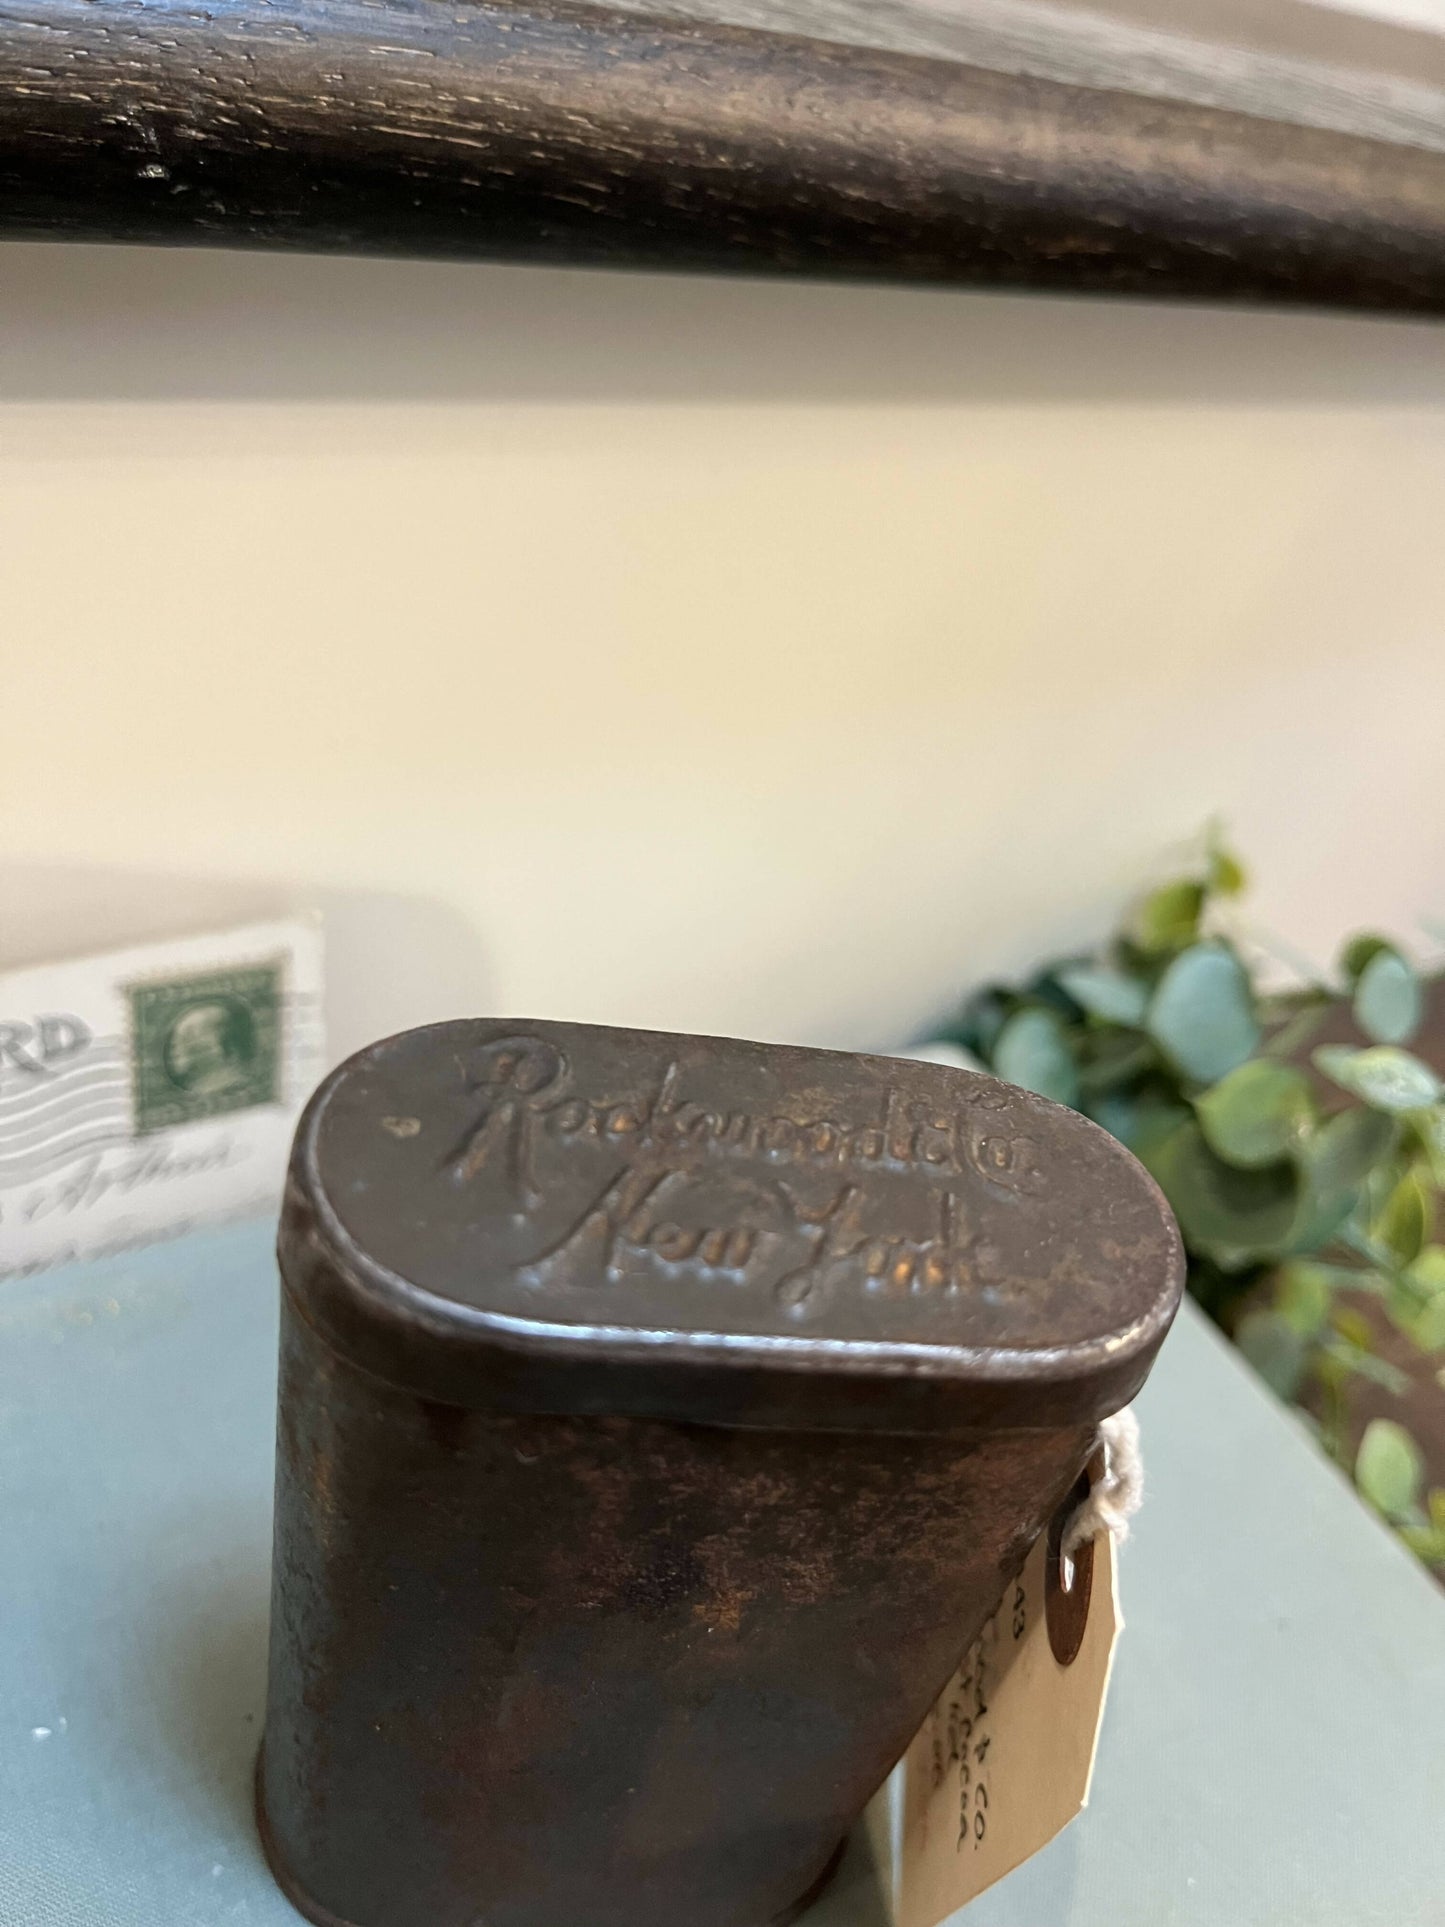 Antique (c. 1900s) Rockwood & Co. breakfast cocoa tin